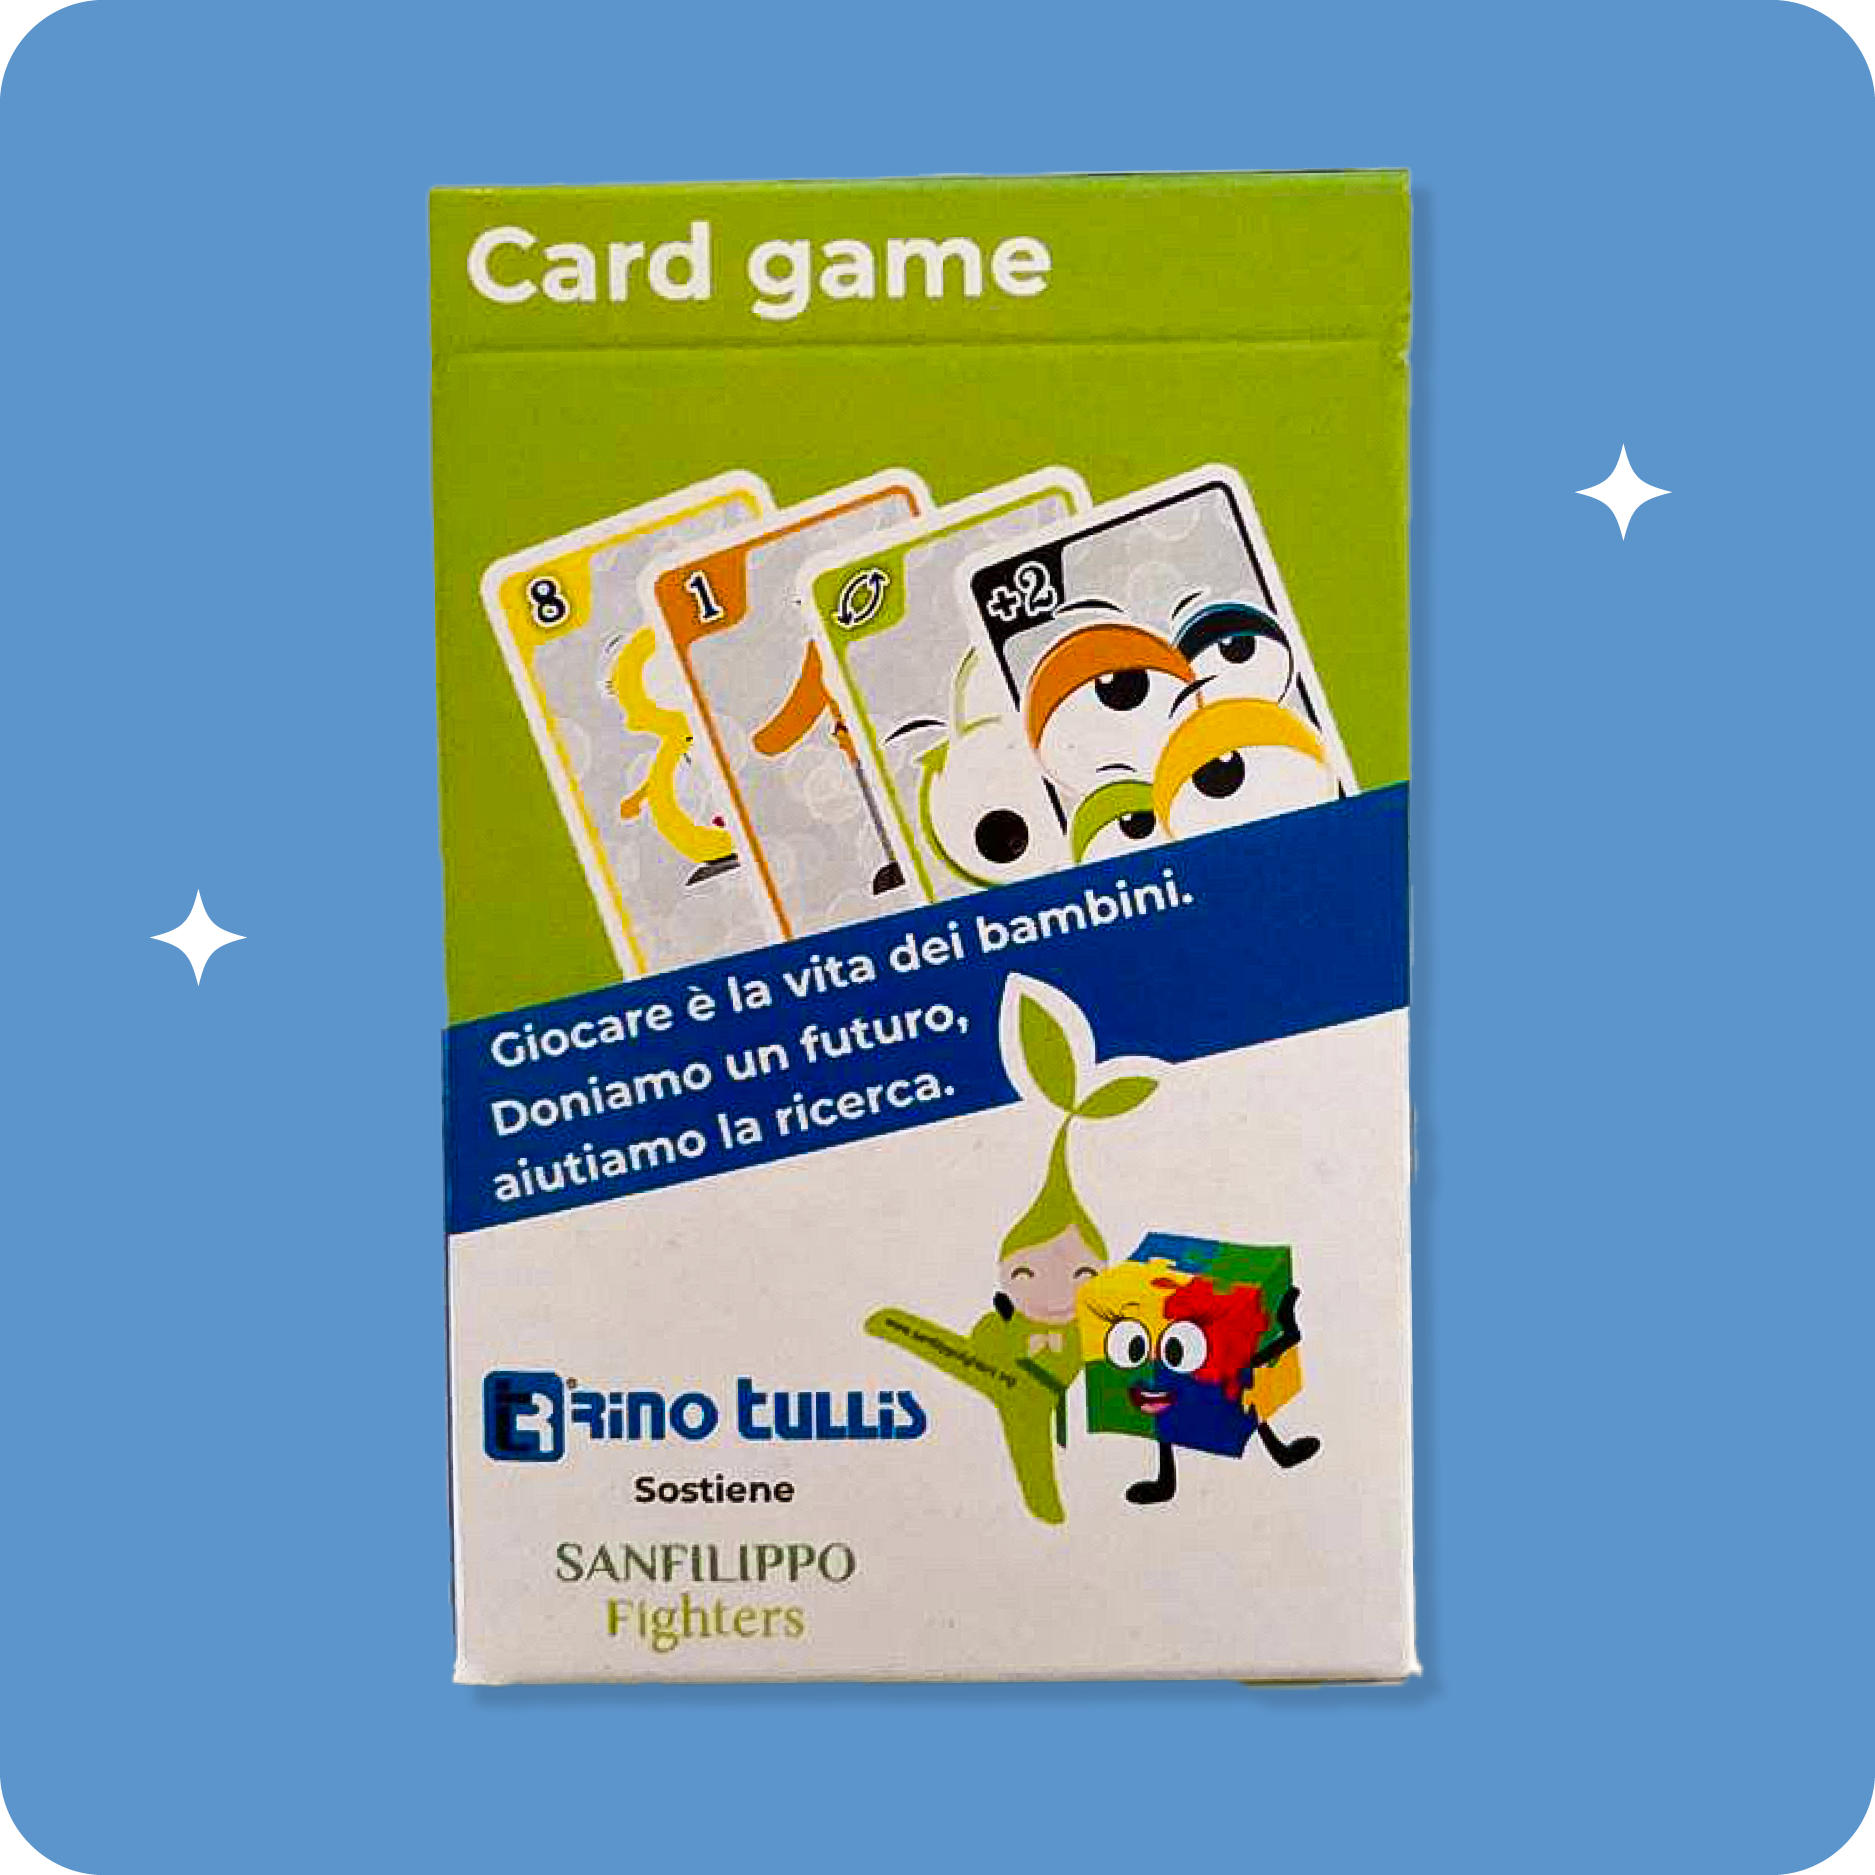 SanfilippoFighters-Card-Game-Rino-Tullis